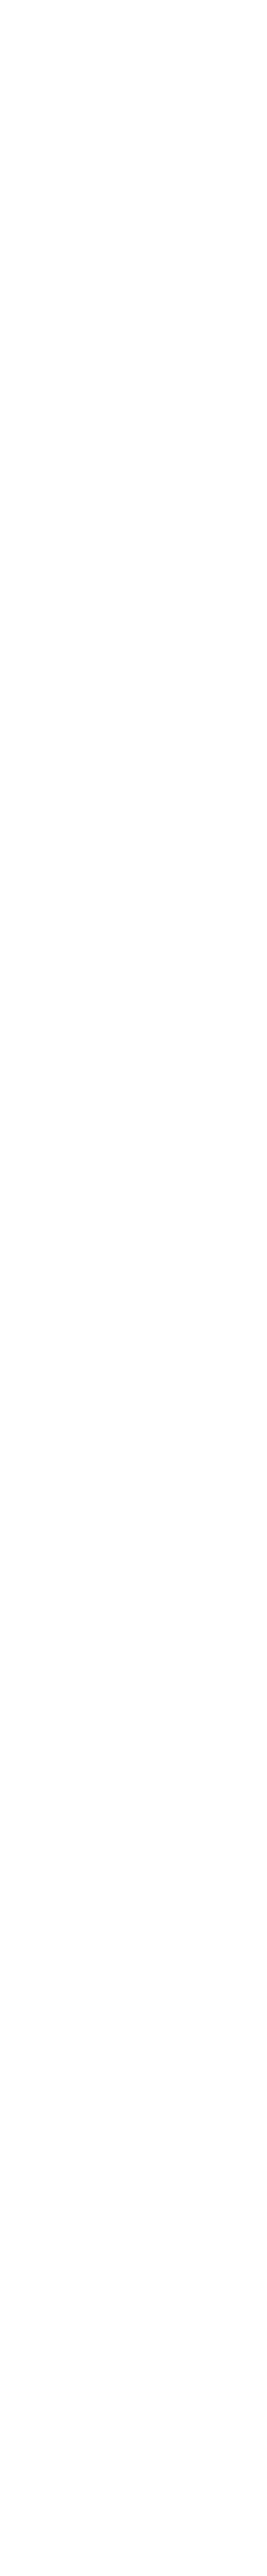 logo Icon Logotype peru brand Web